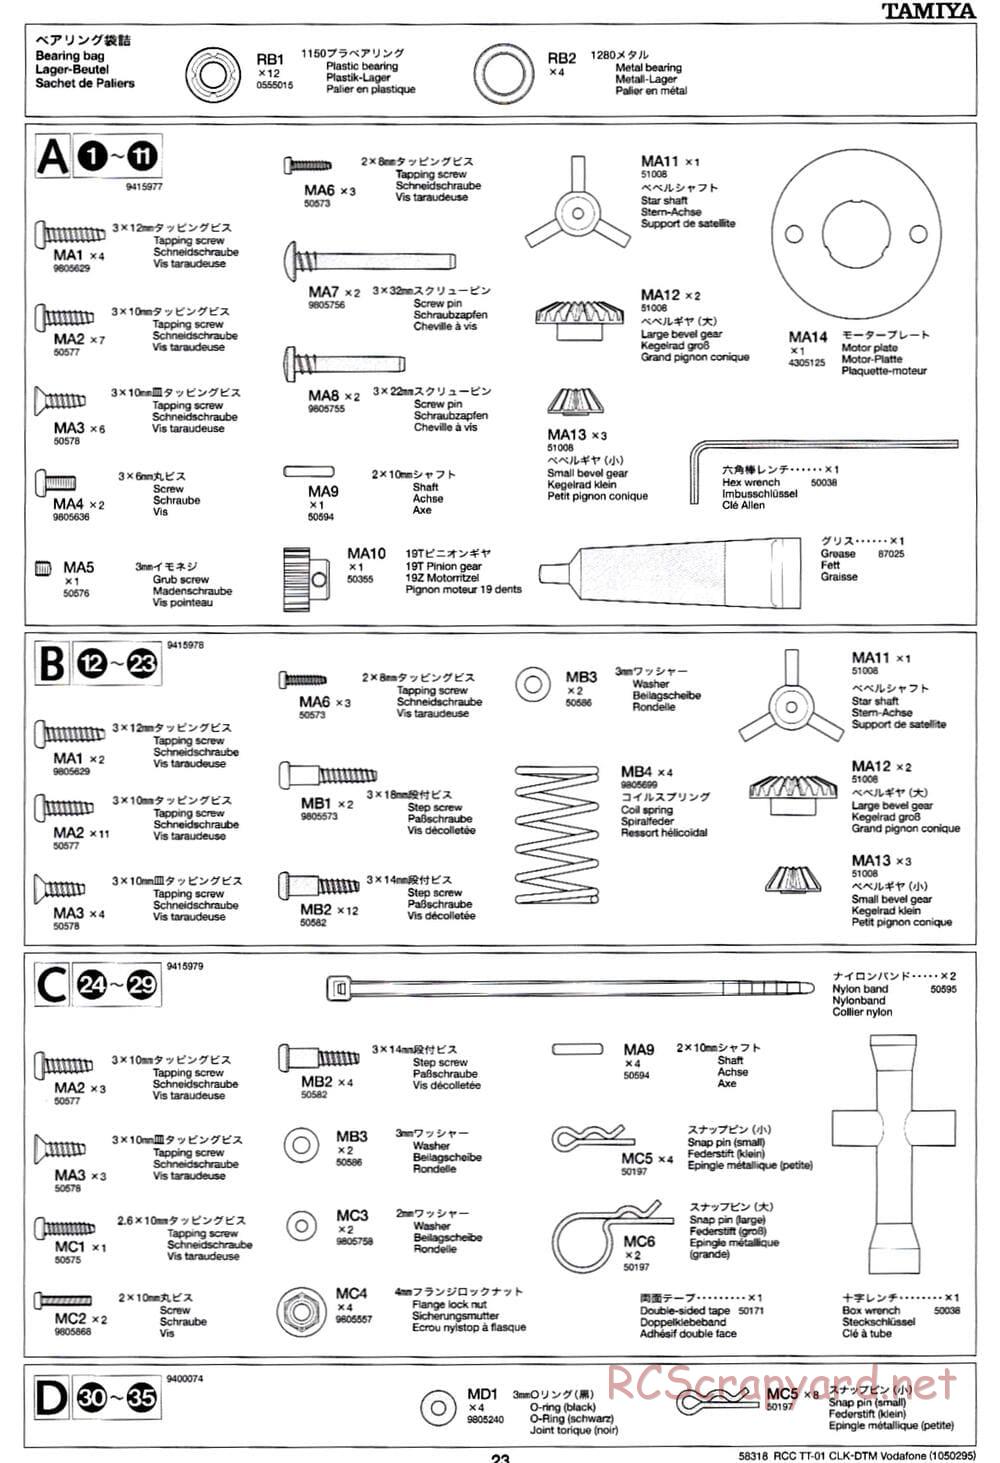 Tamiya - Mercedes-Benz CLK-DTM Team Vodafone AMG-Mercedes - TT-01 Chassis - Manual - Page 23